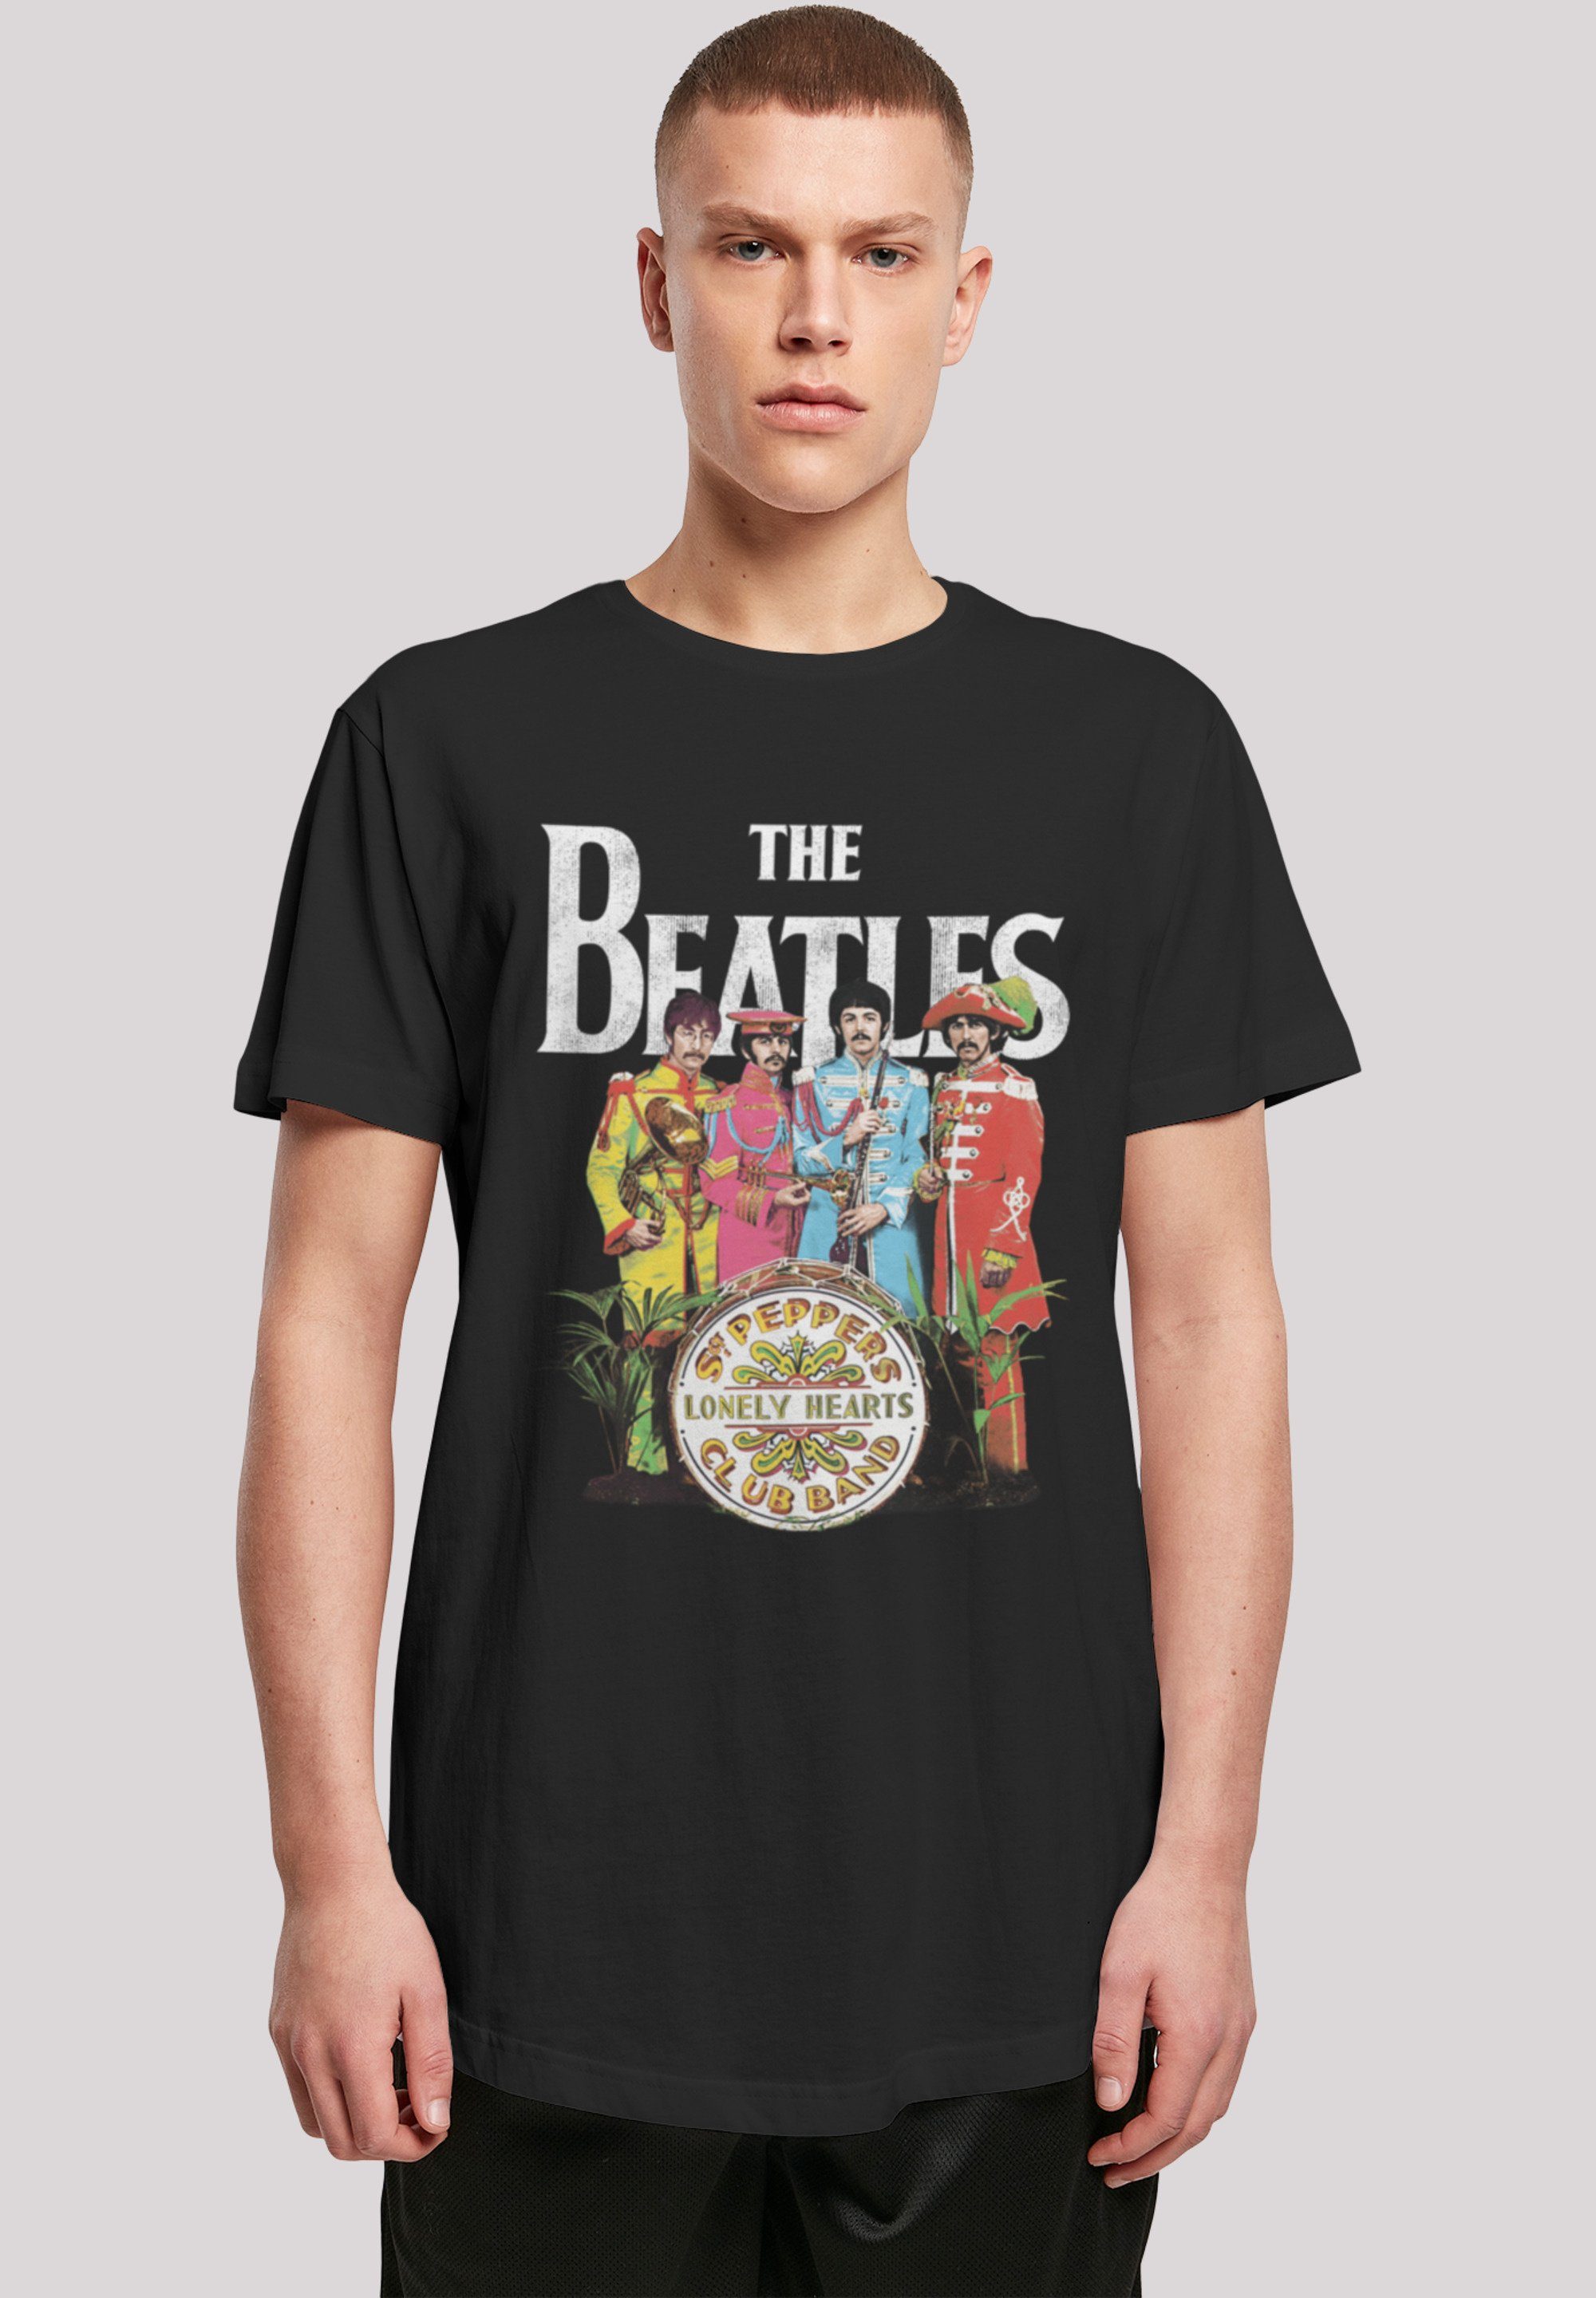 F4NT4STIC T-Shirt Sgt cm M trägt Model Band ist Beatles The Pepper Das Print, Größe 180 Black und groß